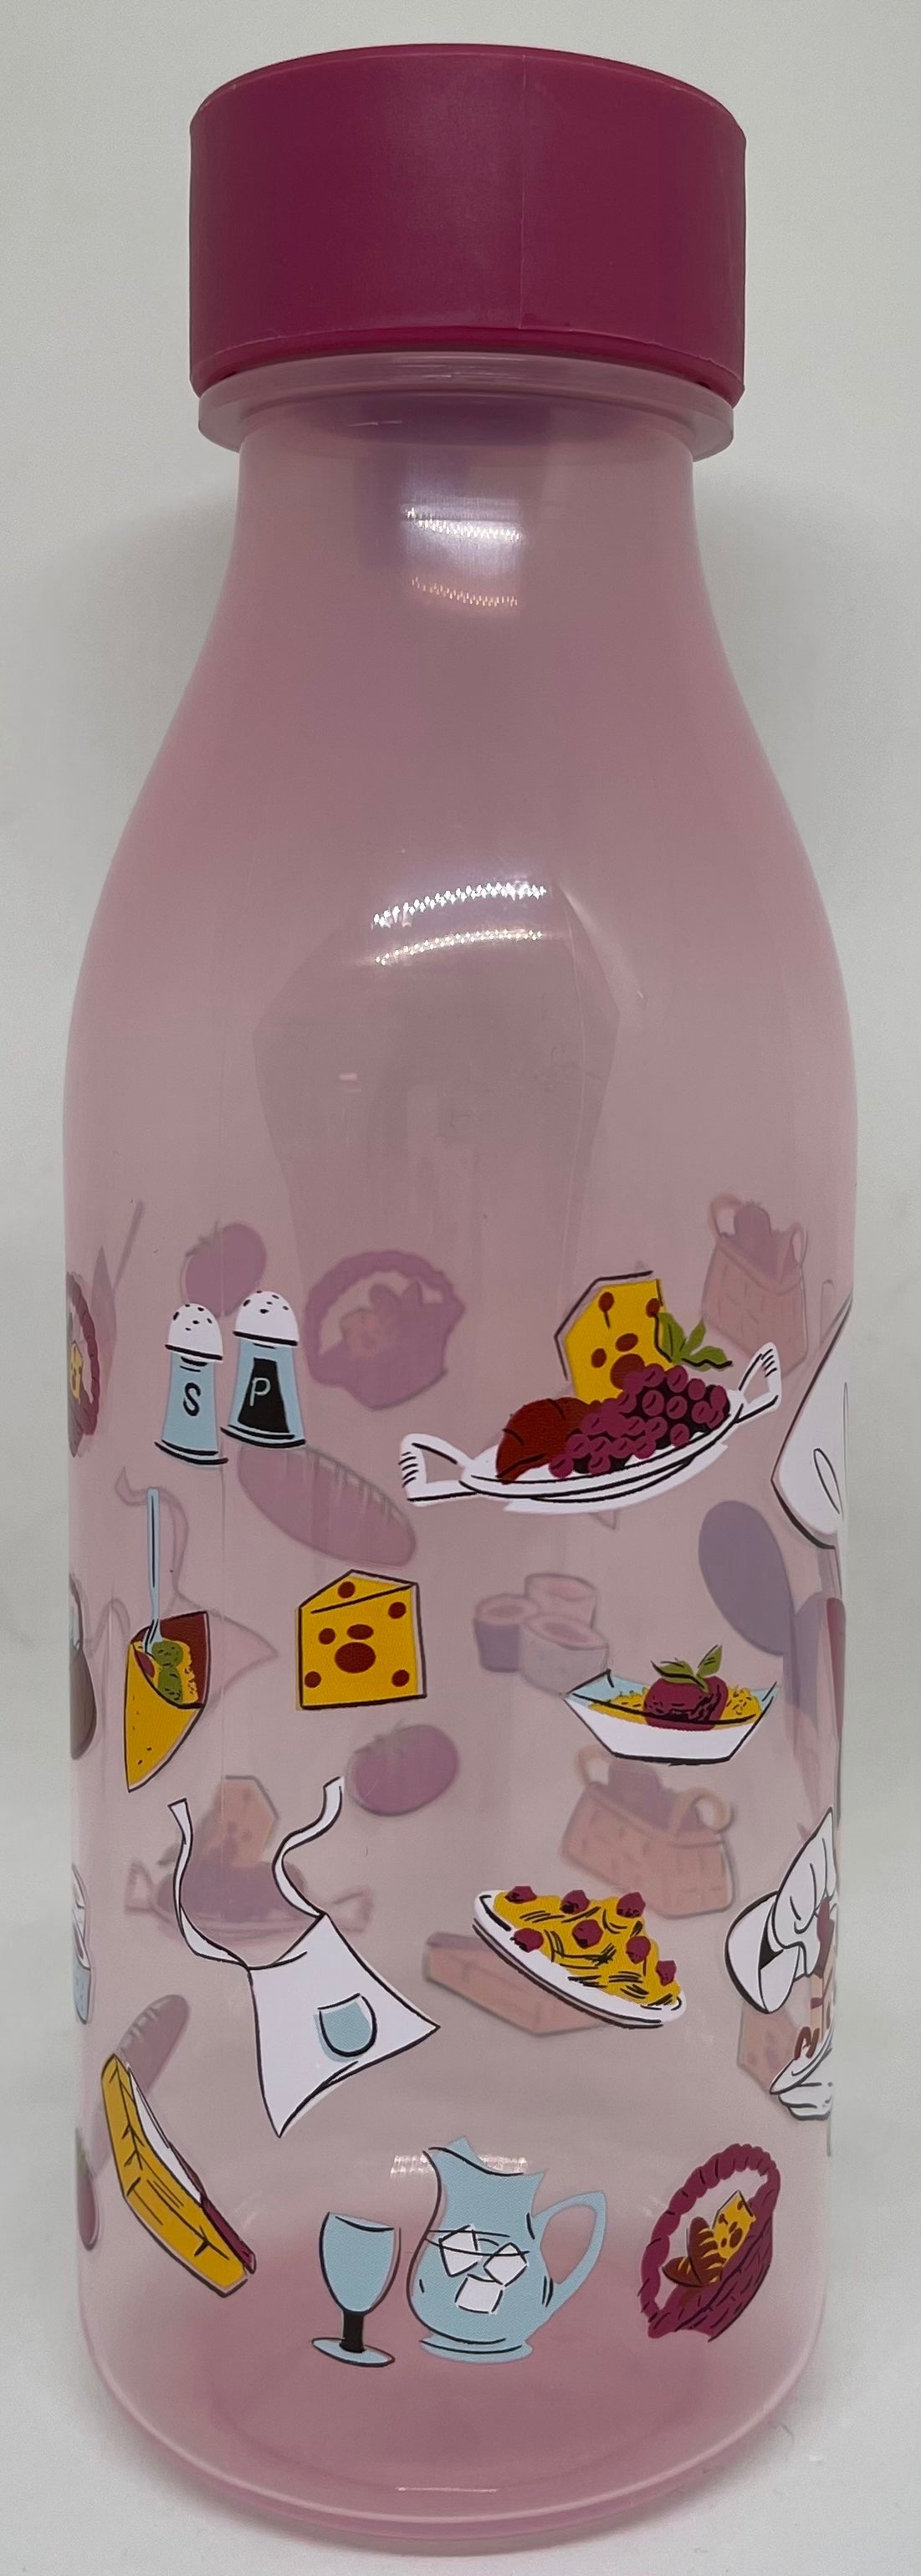 Disney Parks Food and Wine 2020 Chef Minnie Hide 'n Squeak Water Bottle New